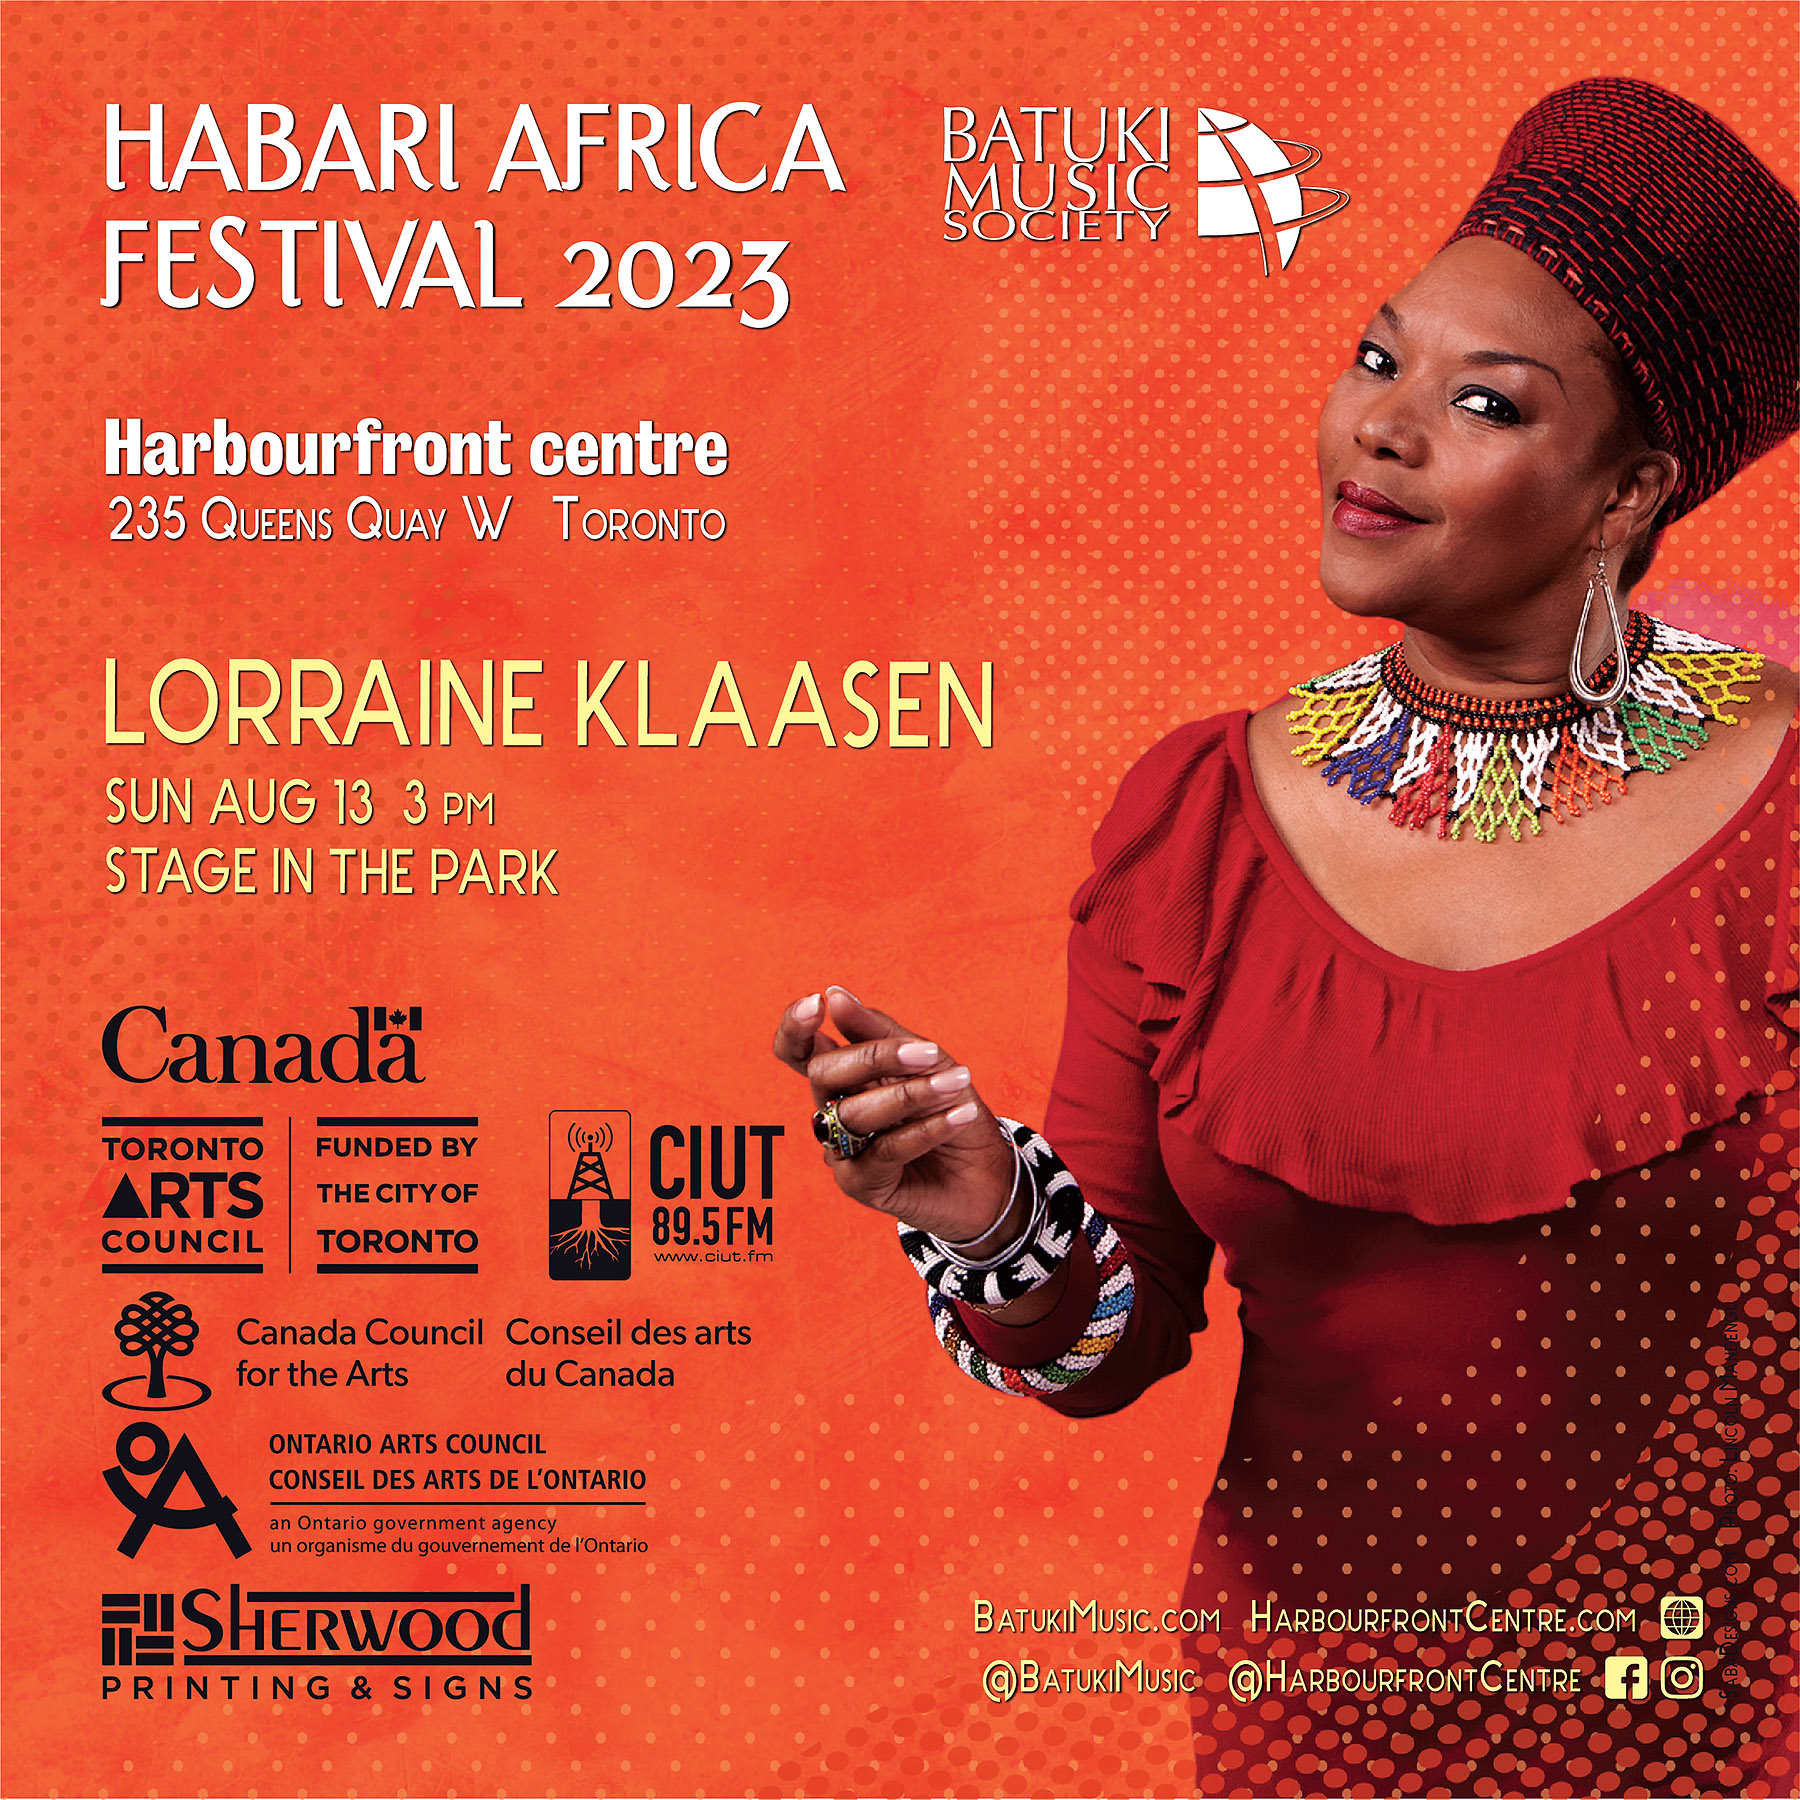 Habari Africa Live Festival 2023 by Batuki Music Society Lorraine Klaasen